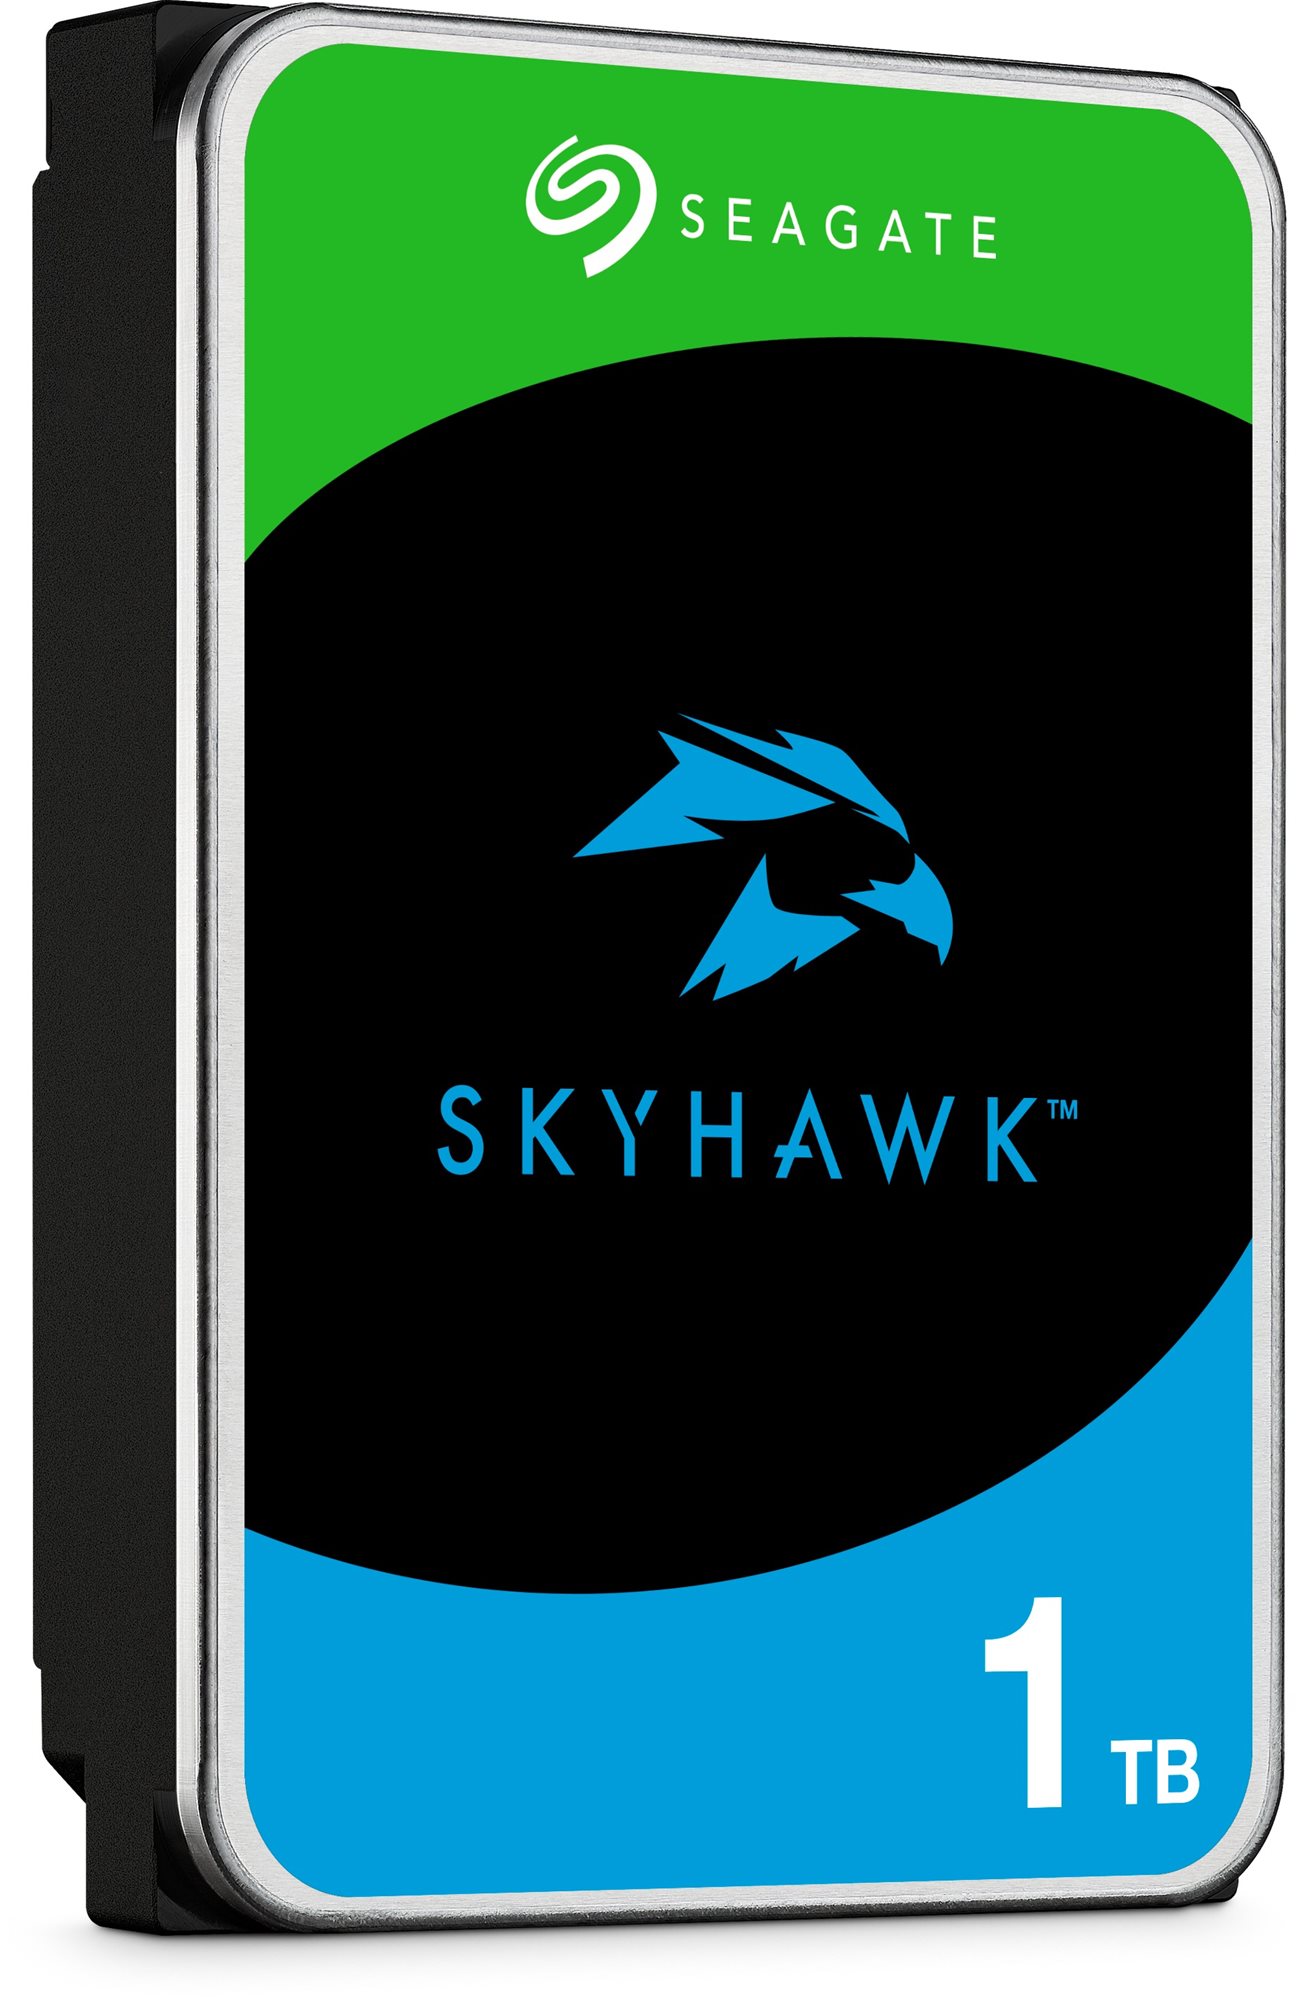 Seagate SkyHawk 1TB